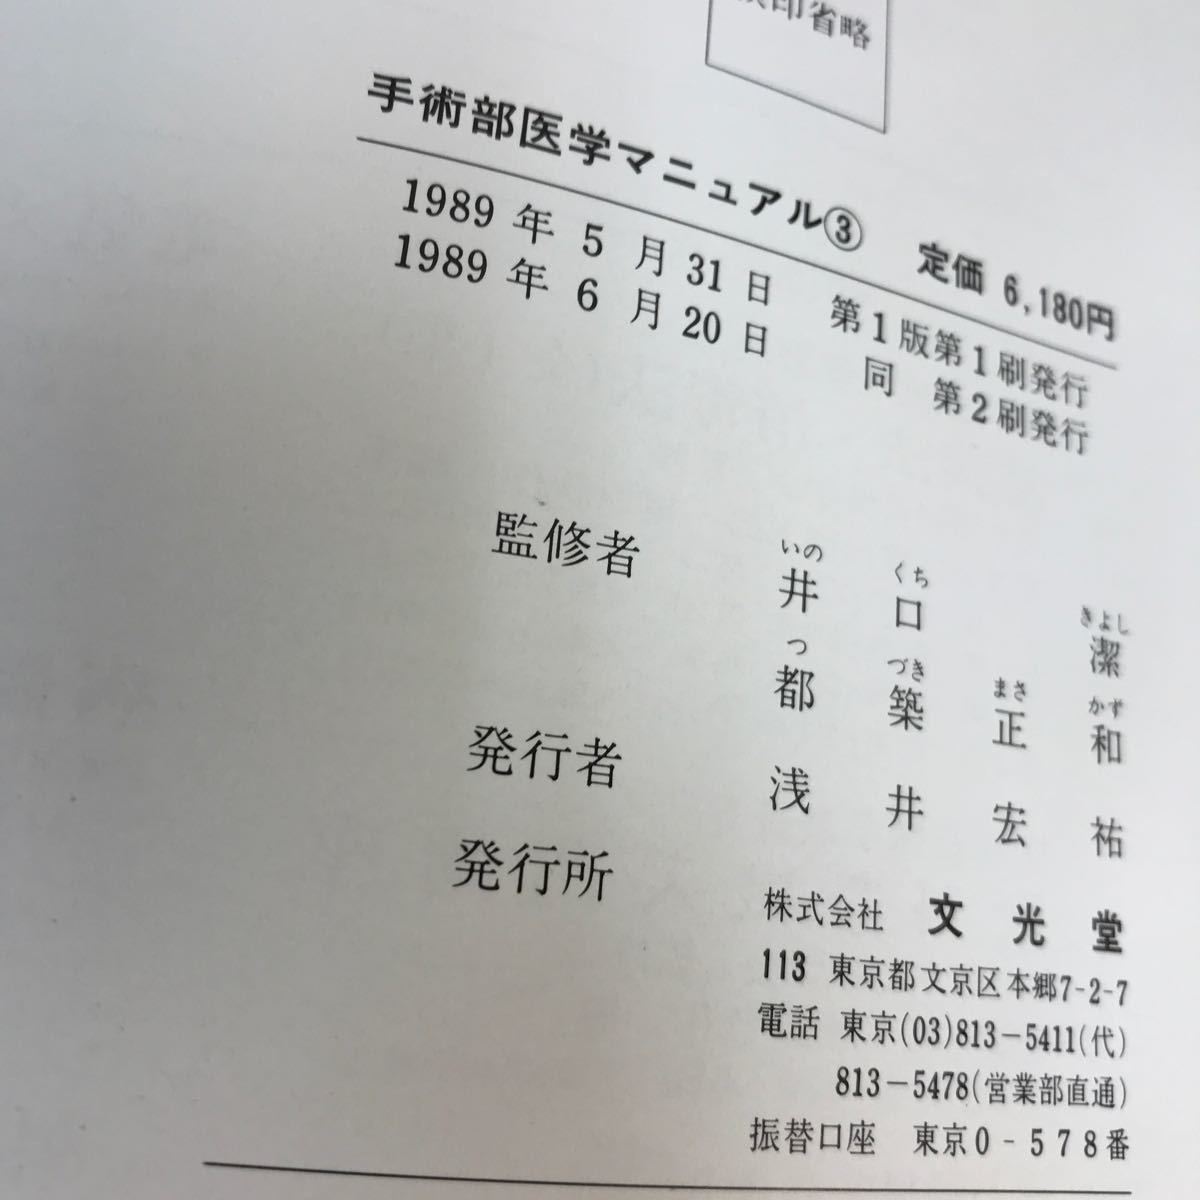 D12-043 手術部医学マニュアル 3 井口潔 文光堂 _画像4